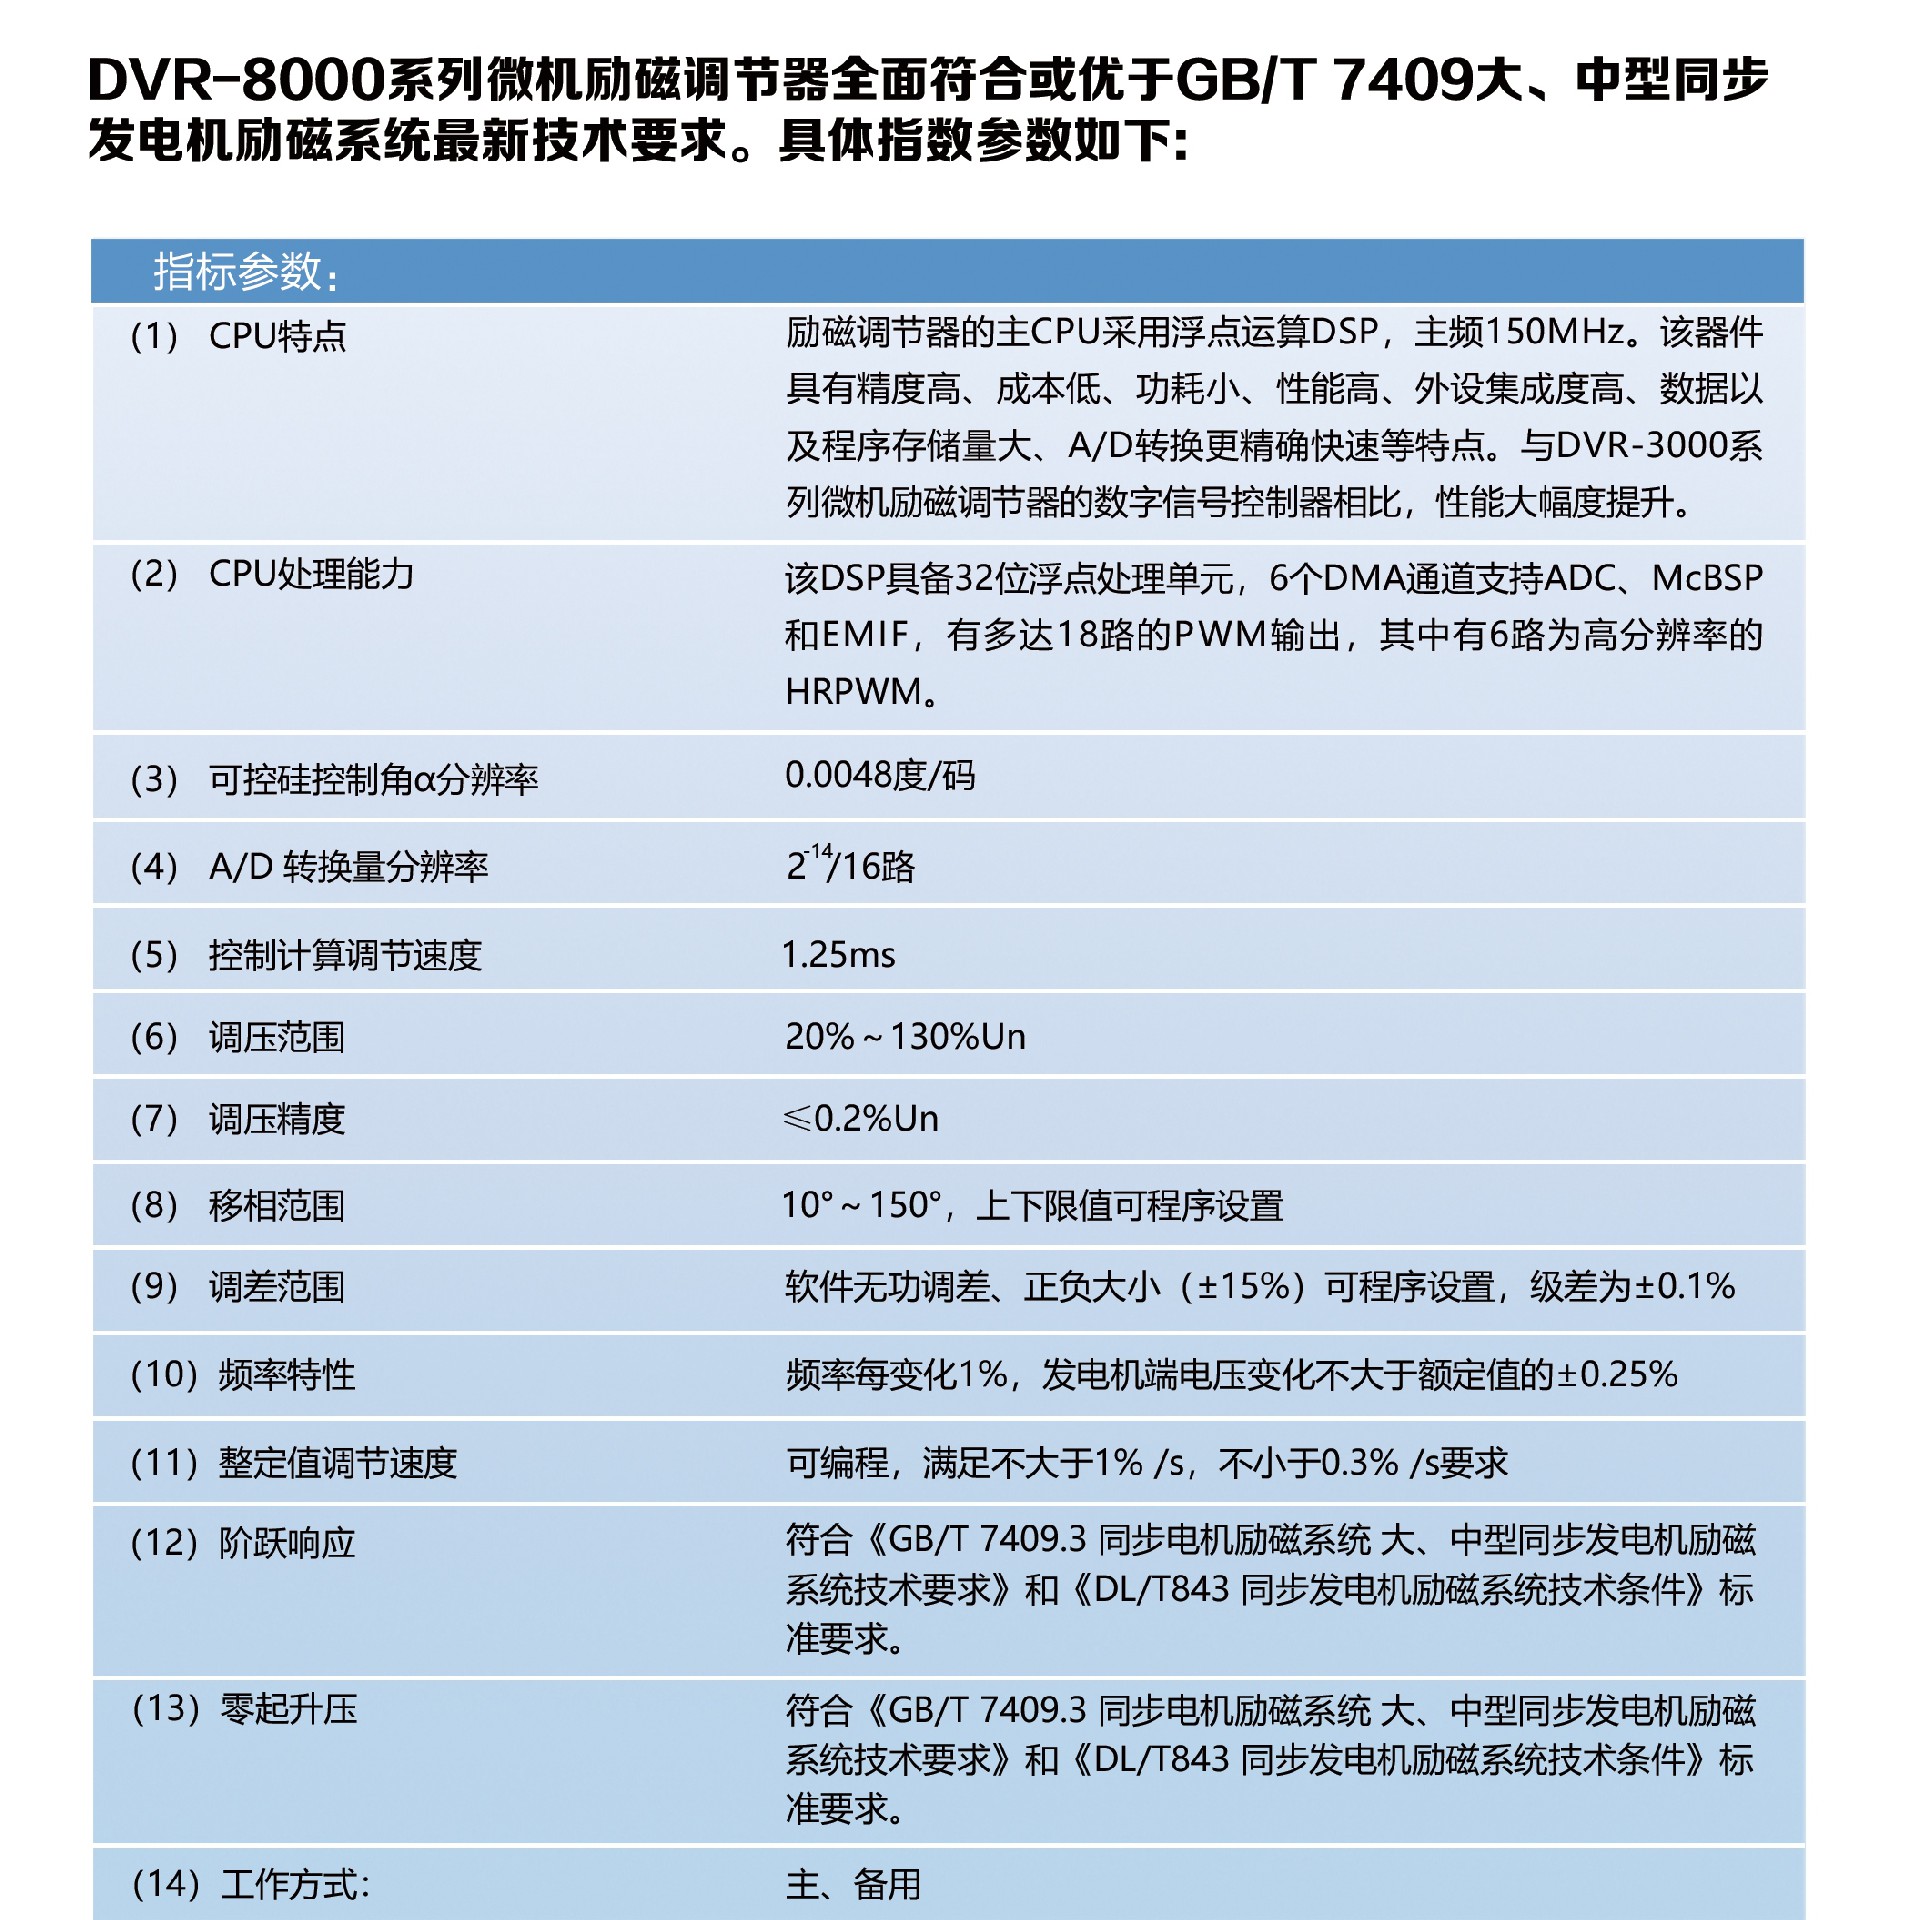 16--DVR-8000系列禁止励磁系统_02-1.jpg